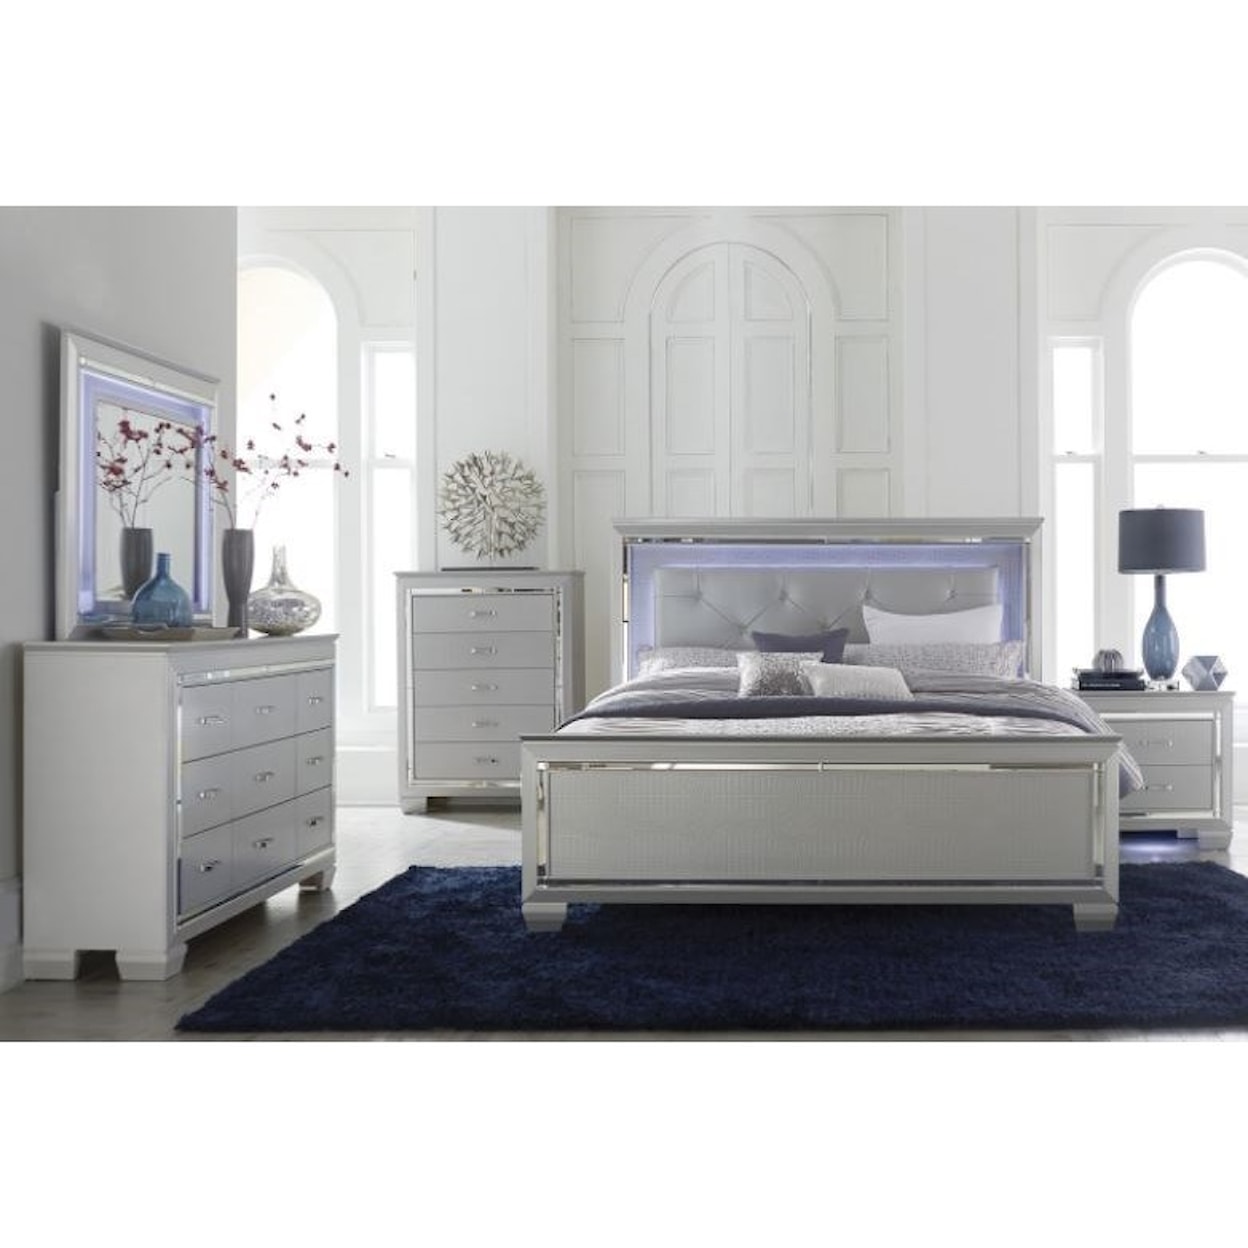 Homelegance Furniture Allura 5-Piece California King Bedroom Group